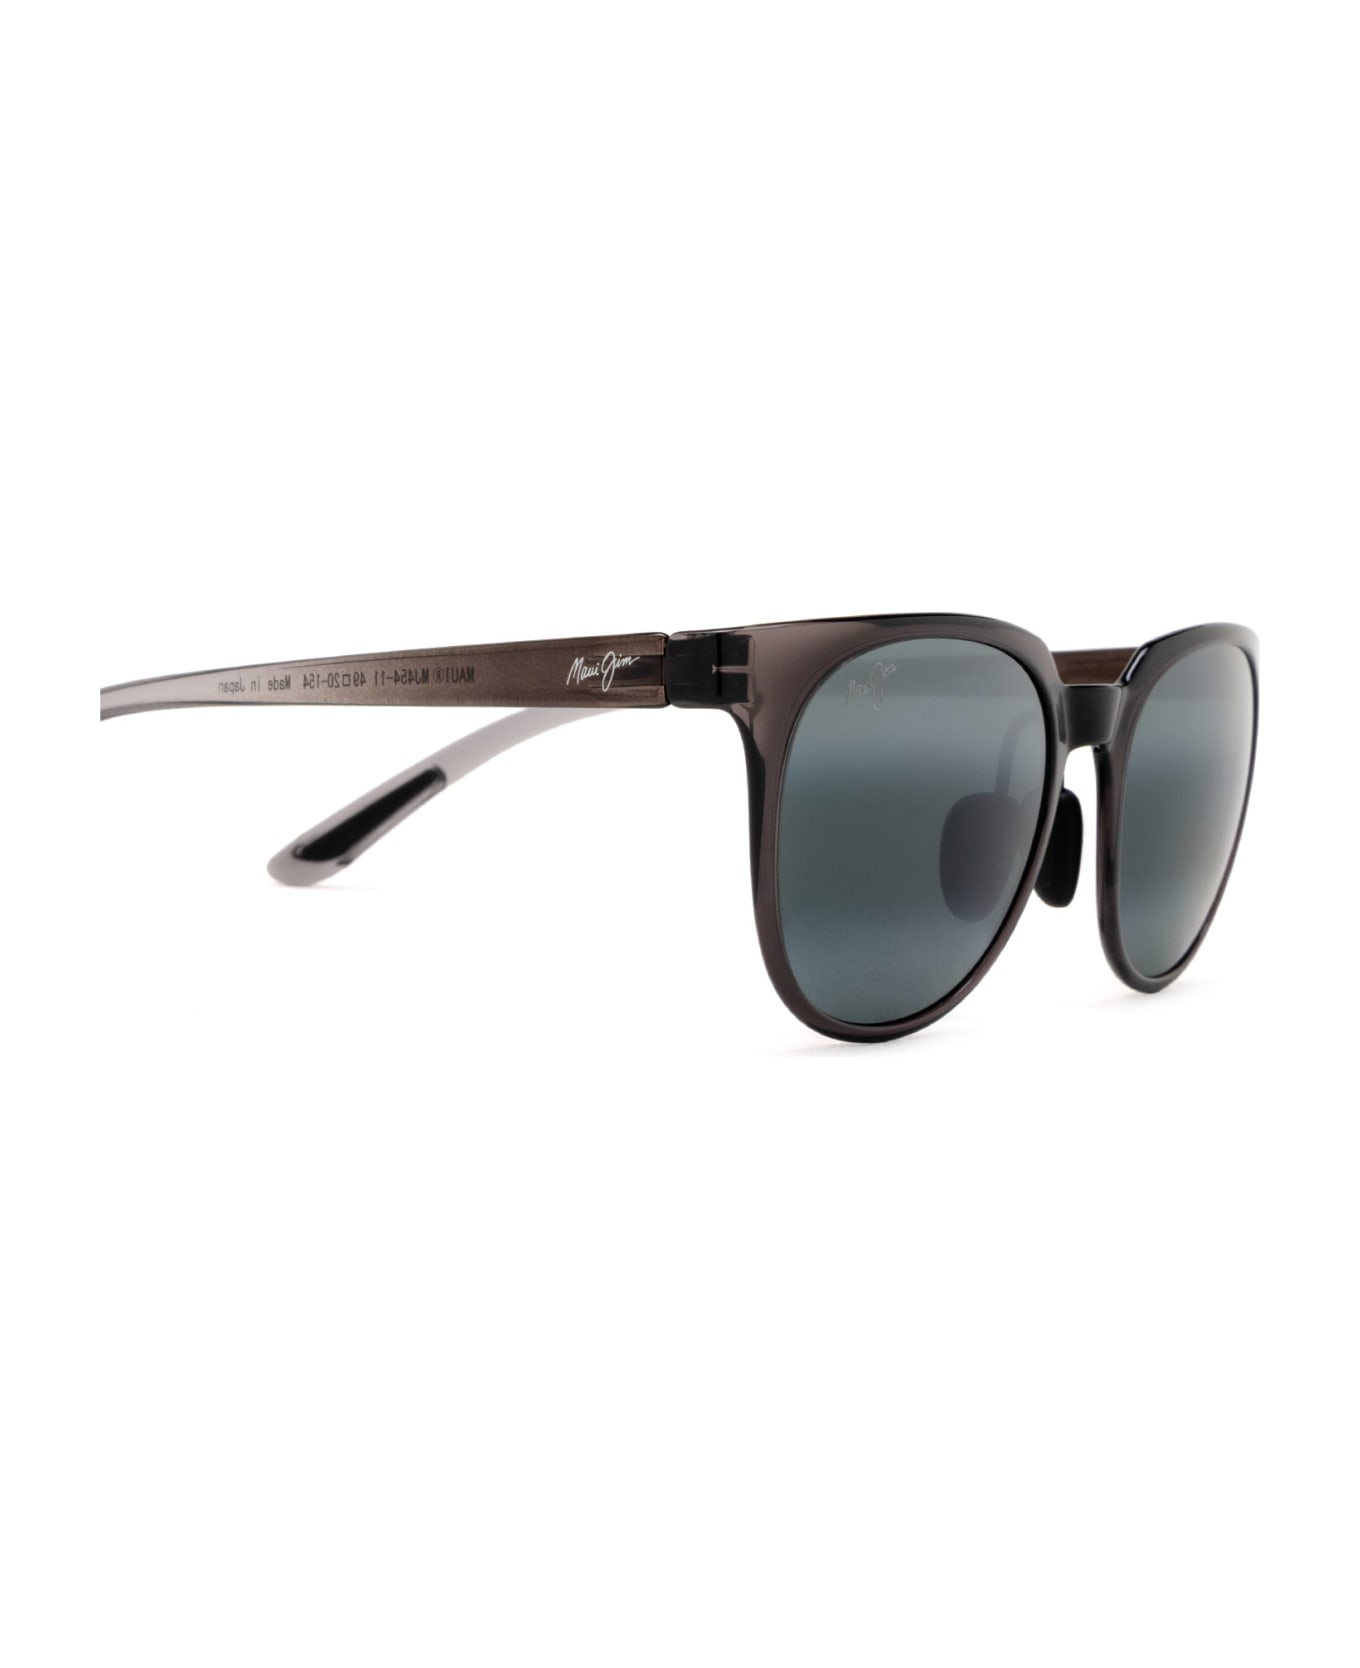 Maui Jim Mj454 Translucent Grey Sunglasses - Translucent Grey サングラス